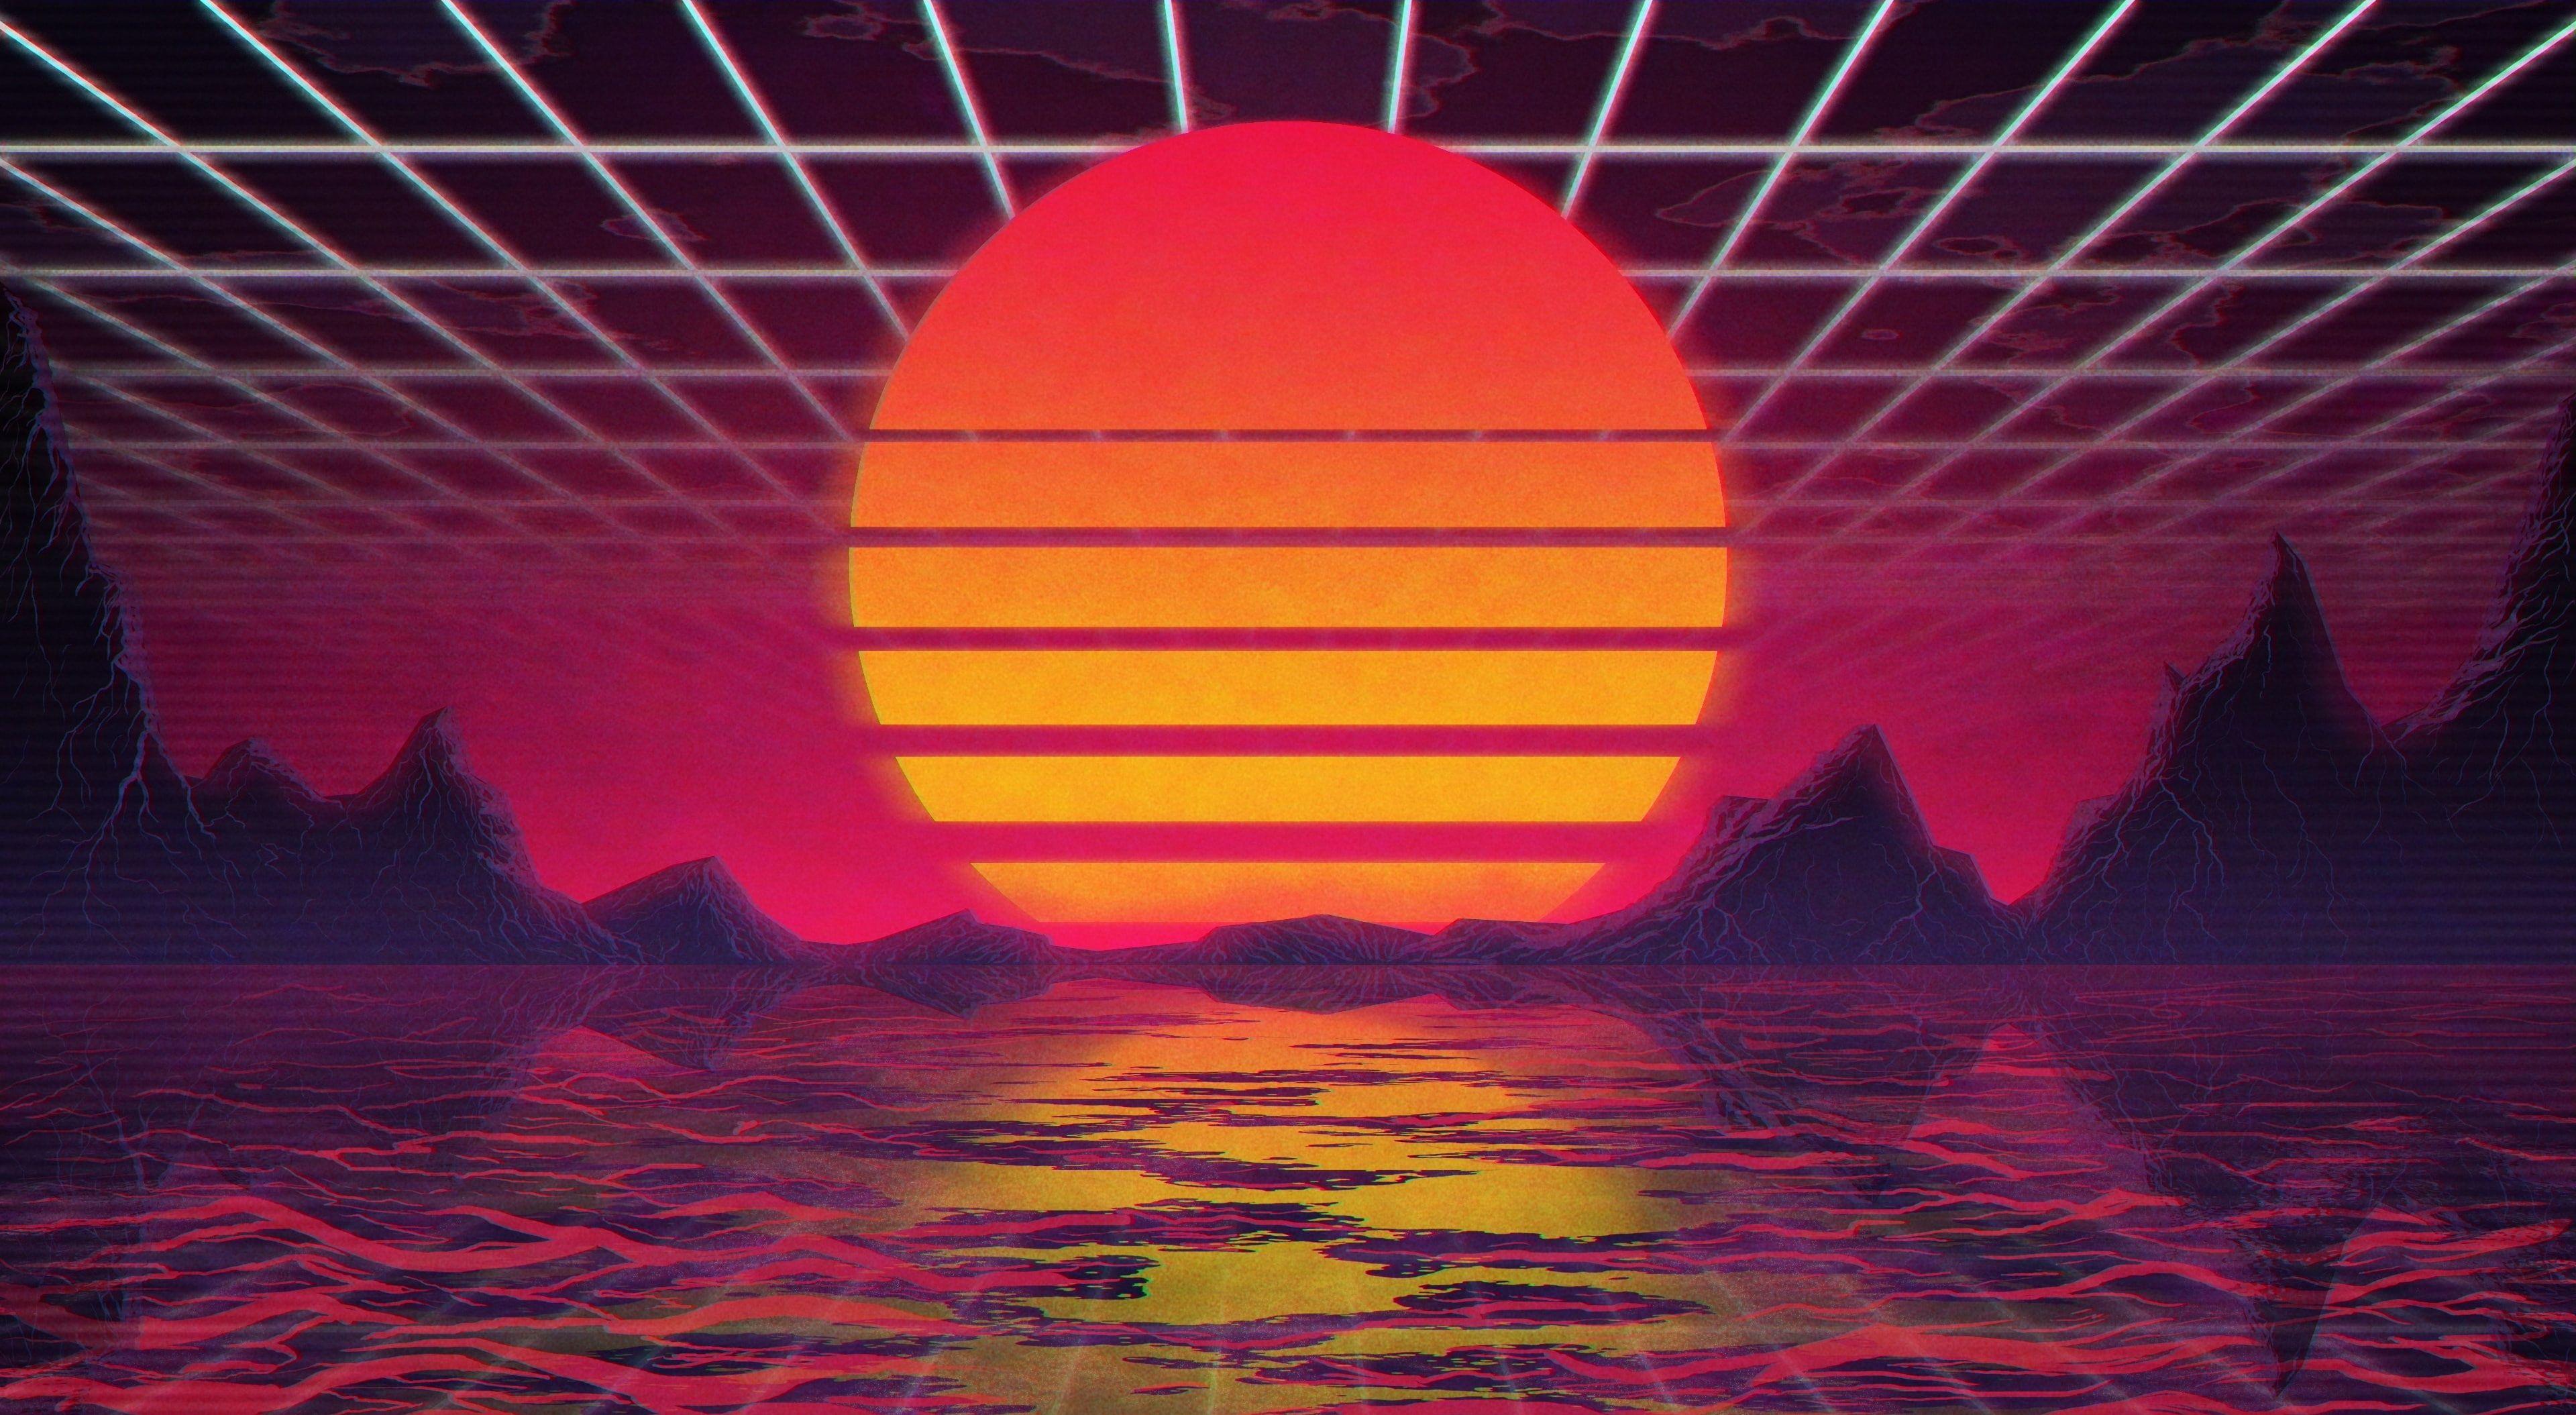 The sun Music Star Background 80s wallpaper Neon VHS 80s